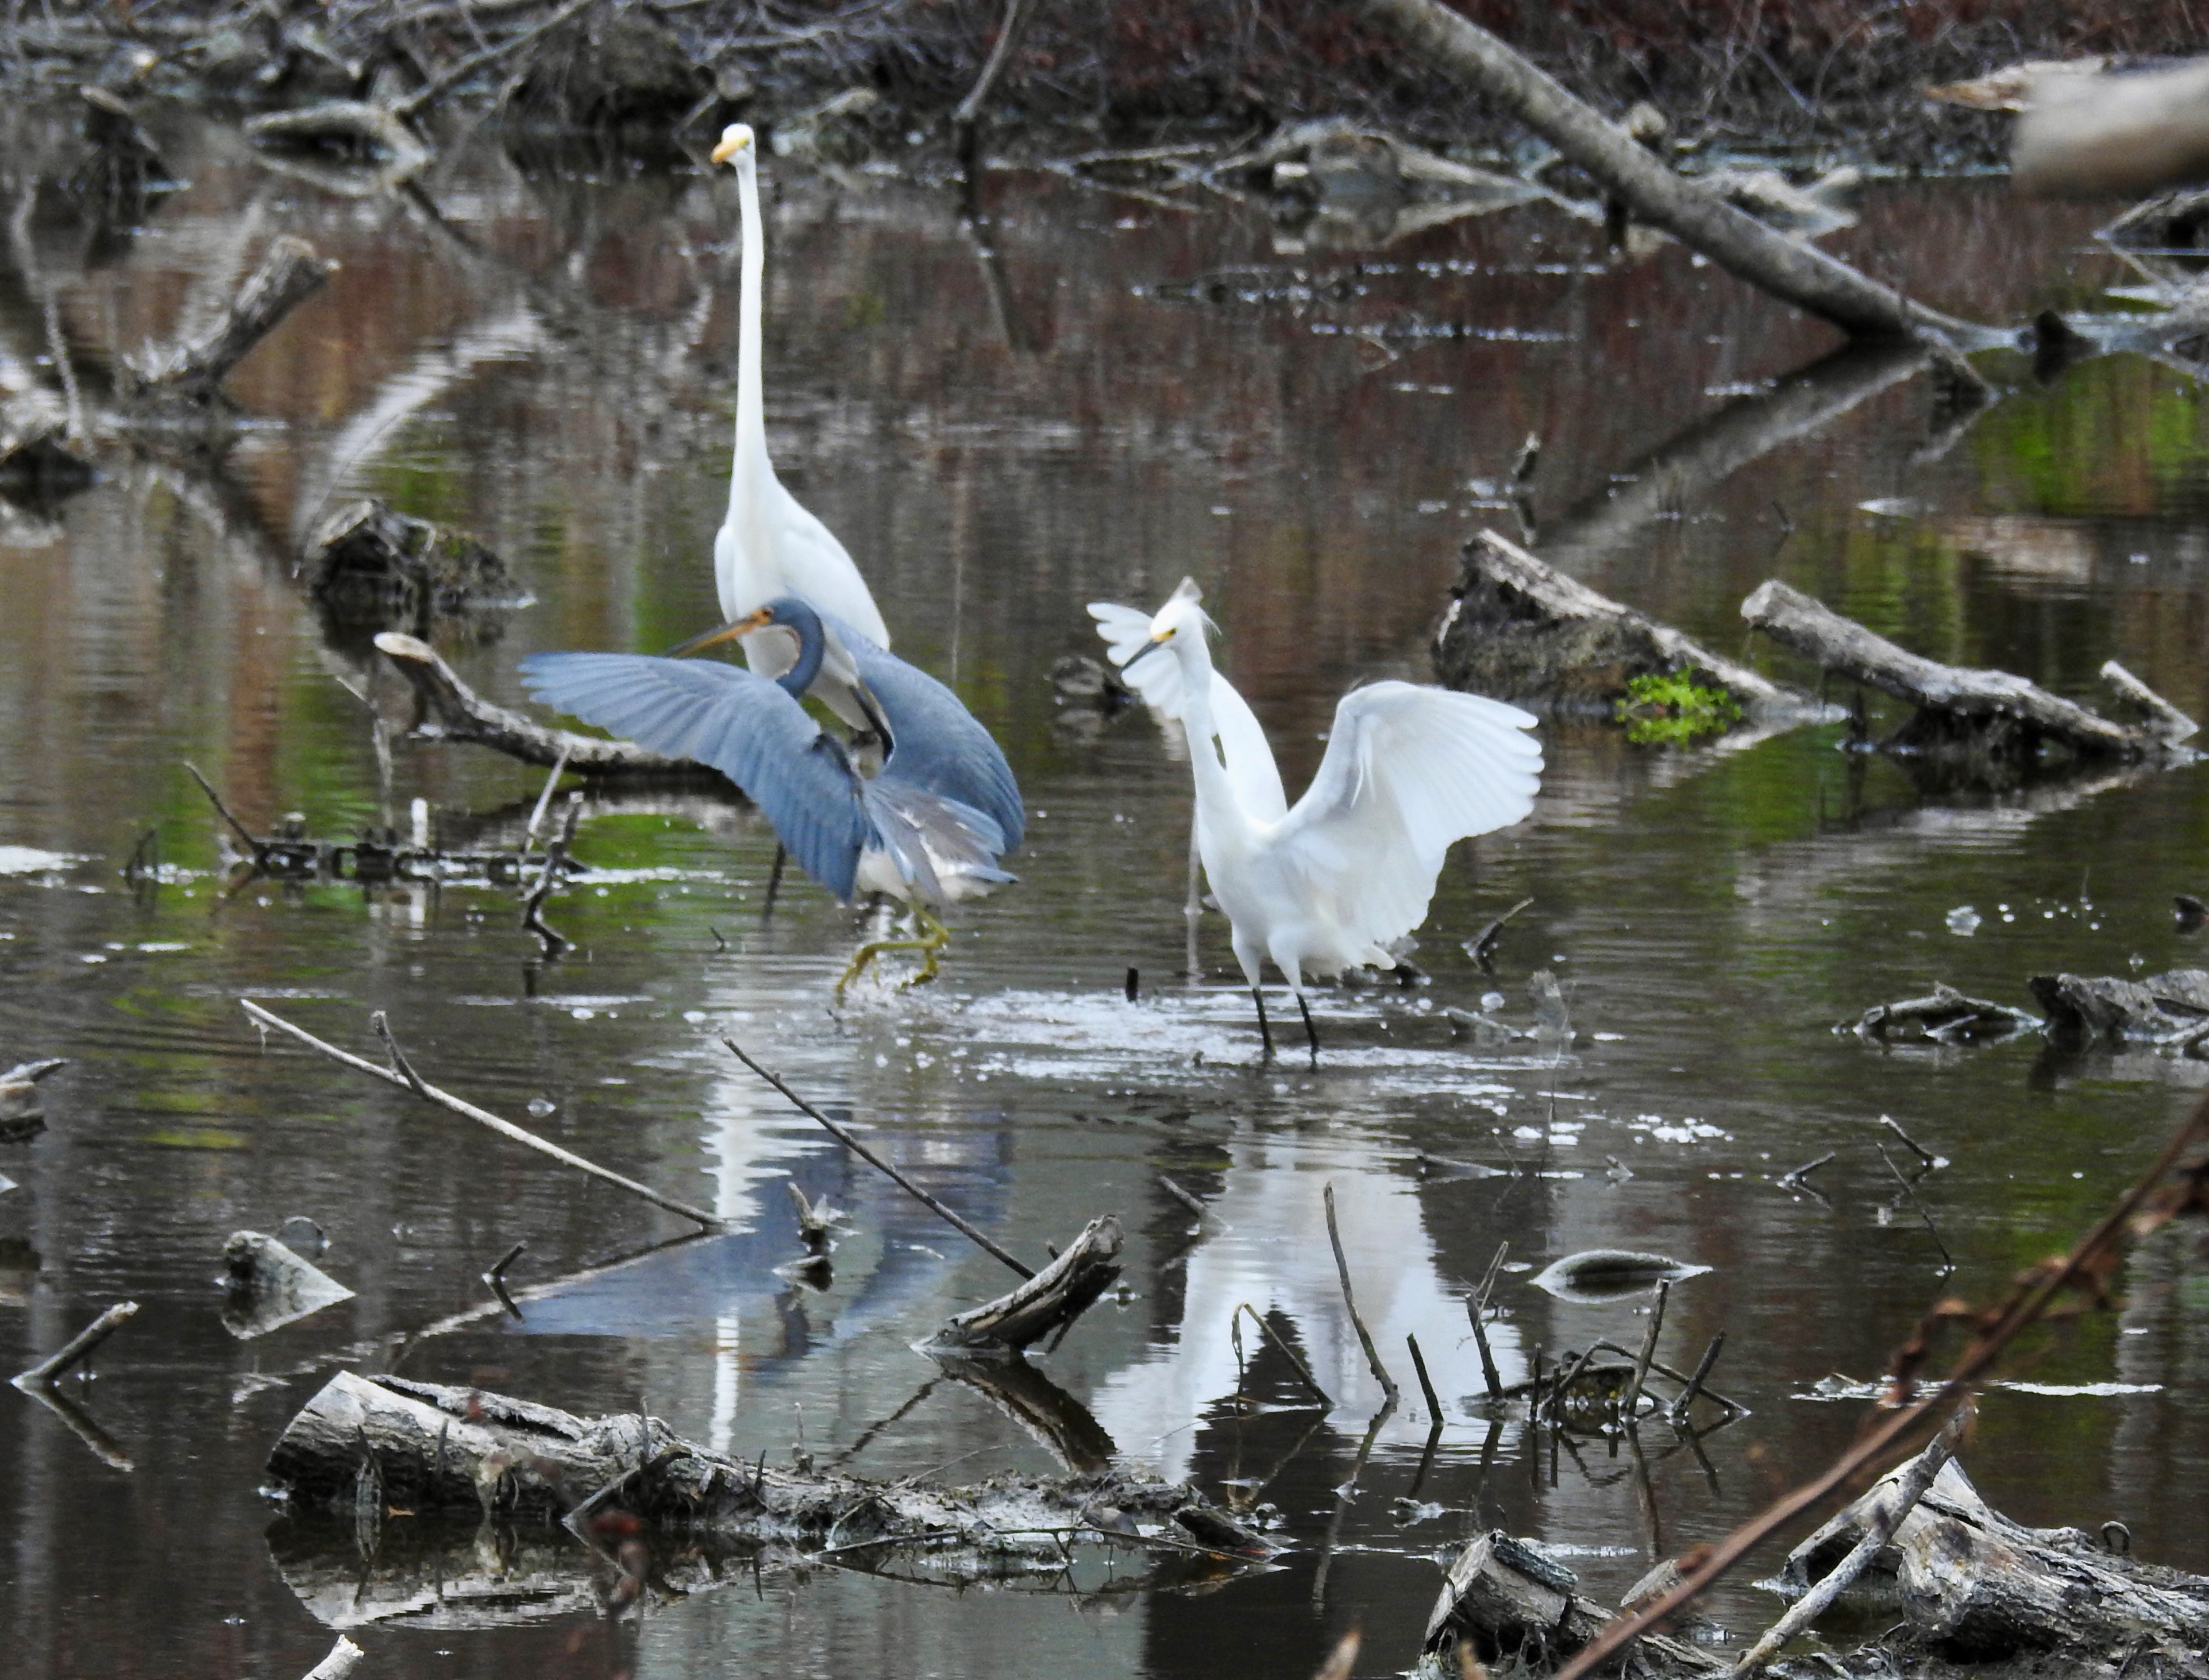 A wetland with birds.